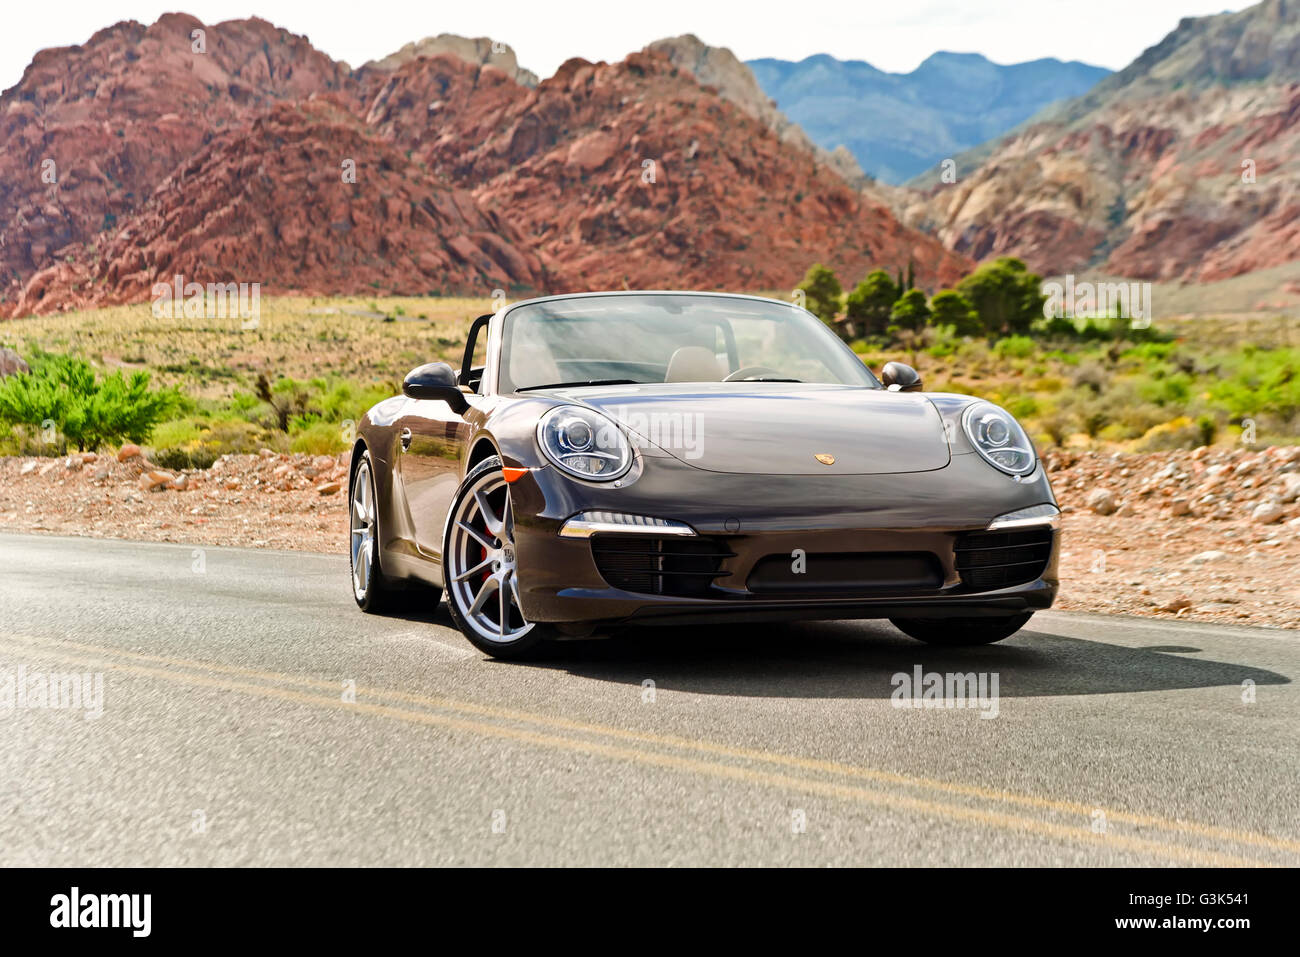 Front view of a Porsche 911 Carrera car on a desert road Stock Photo